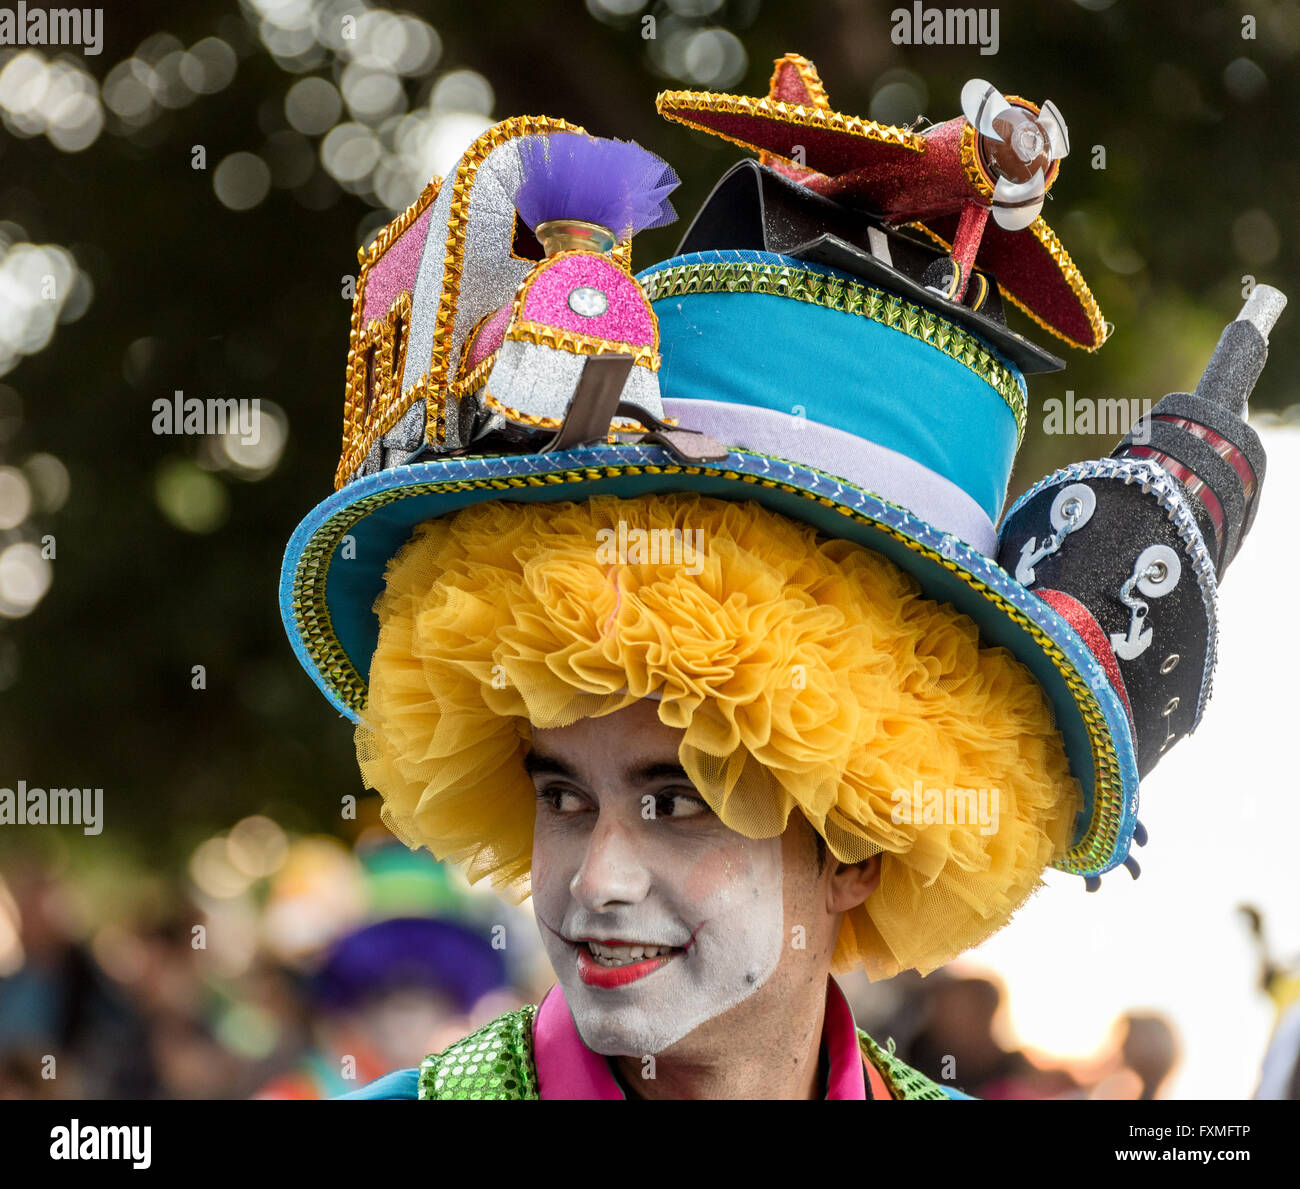 Hombre con sombrero elaborado e imágenes de alta resolución - Alamy